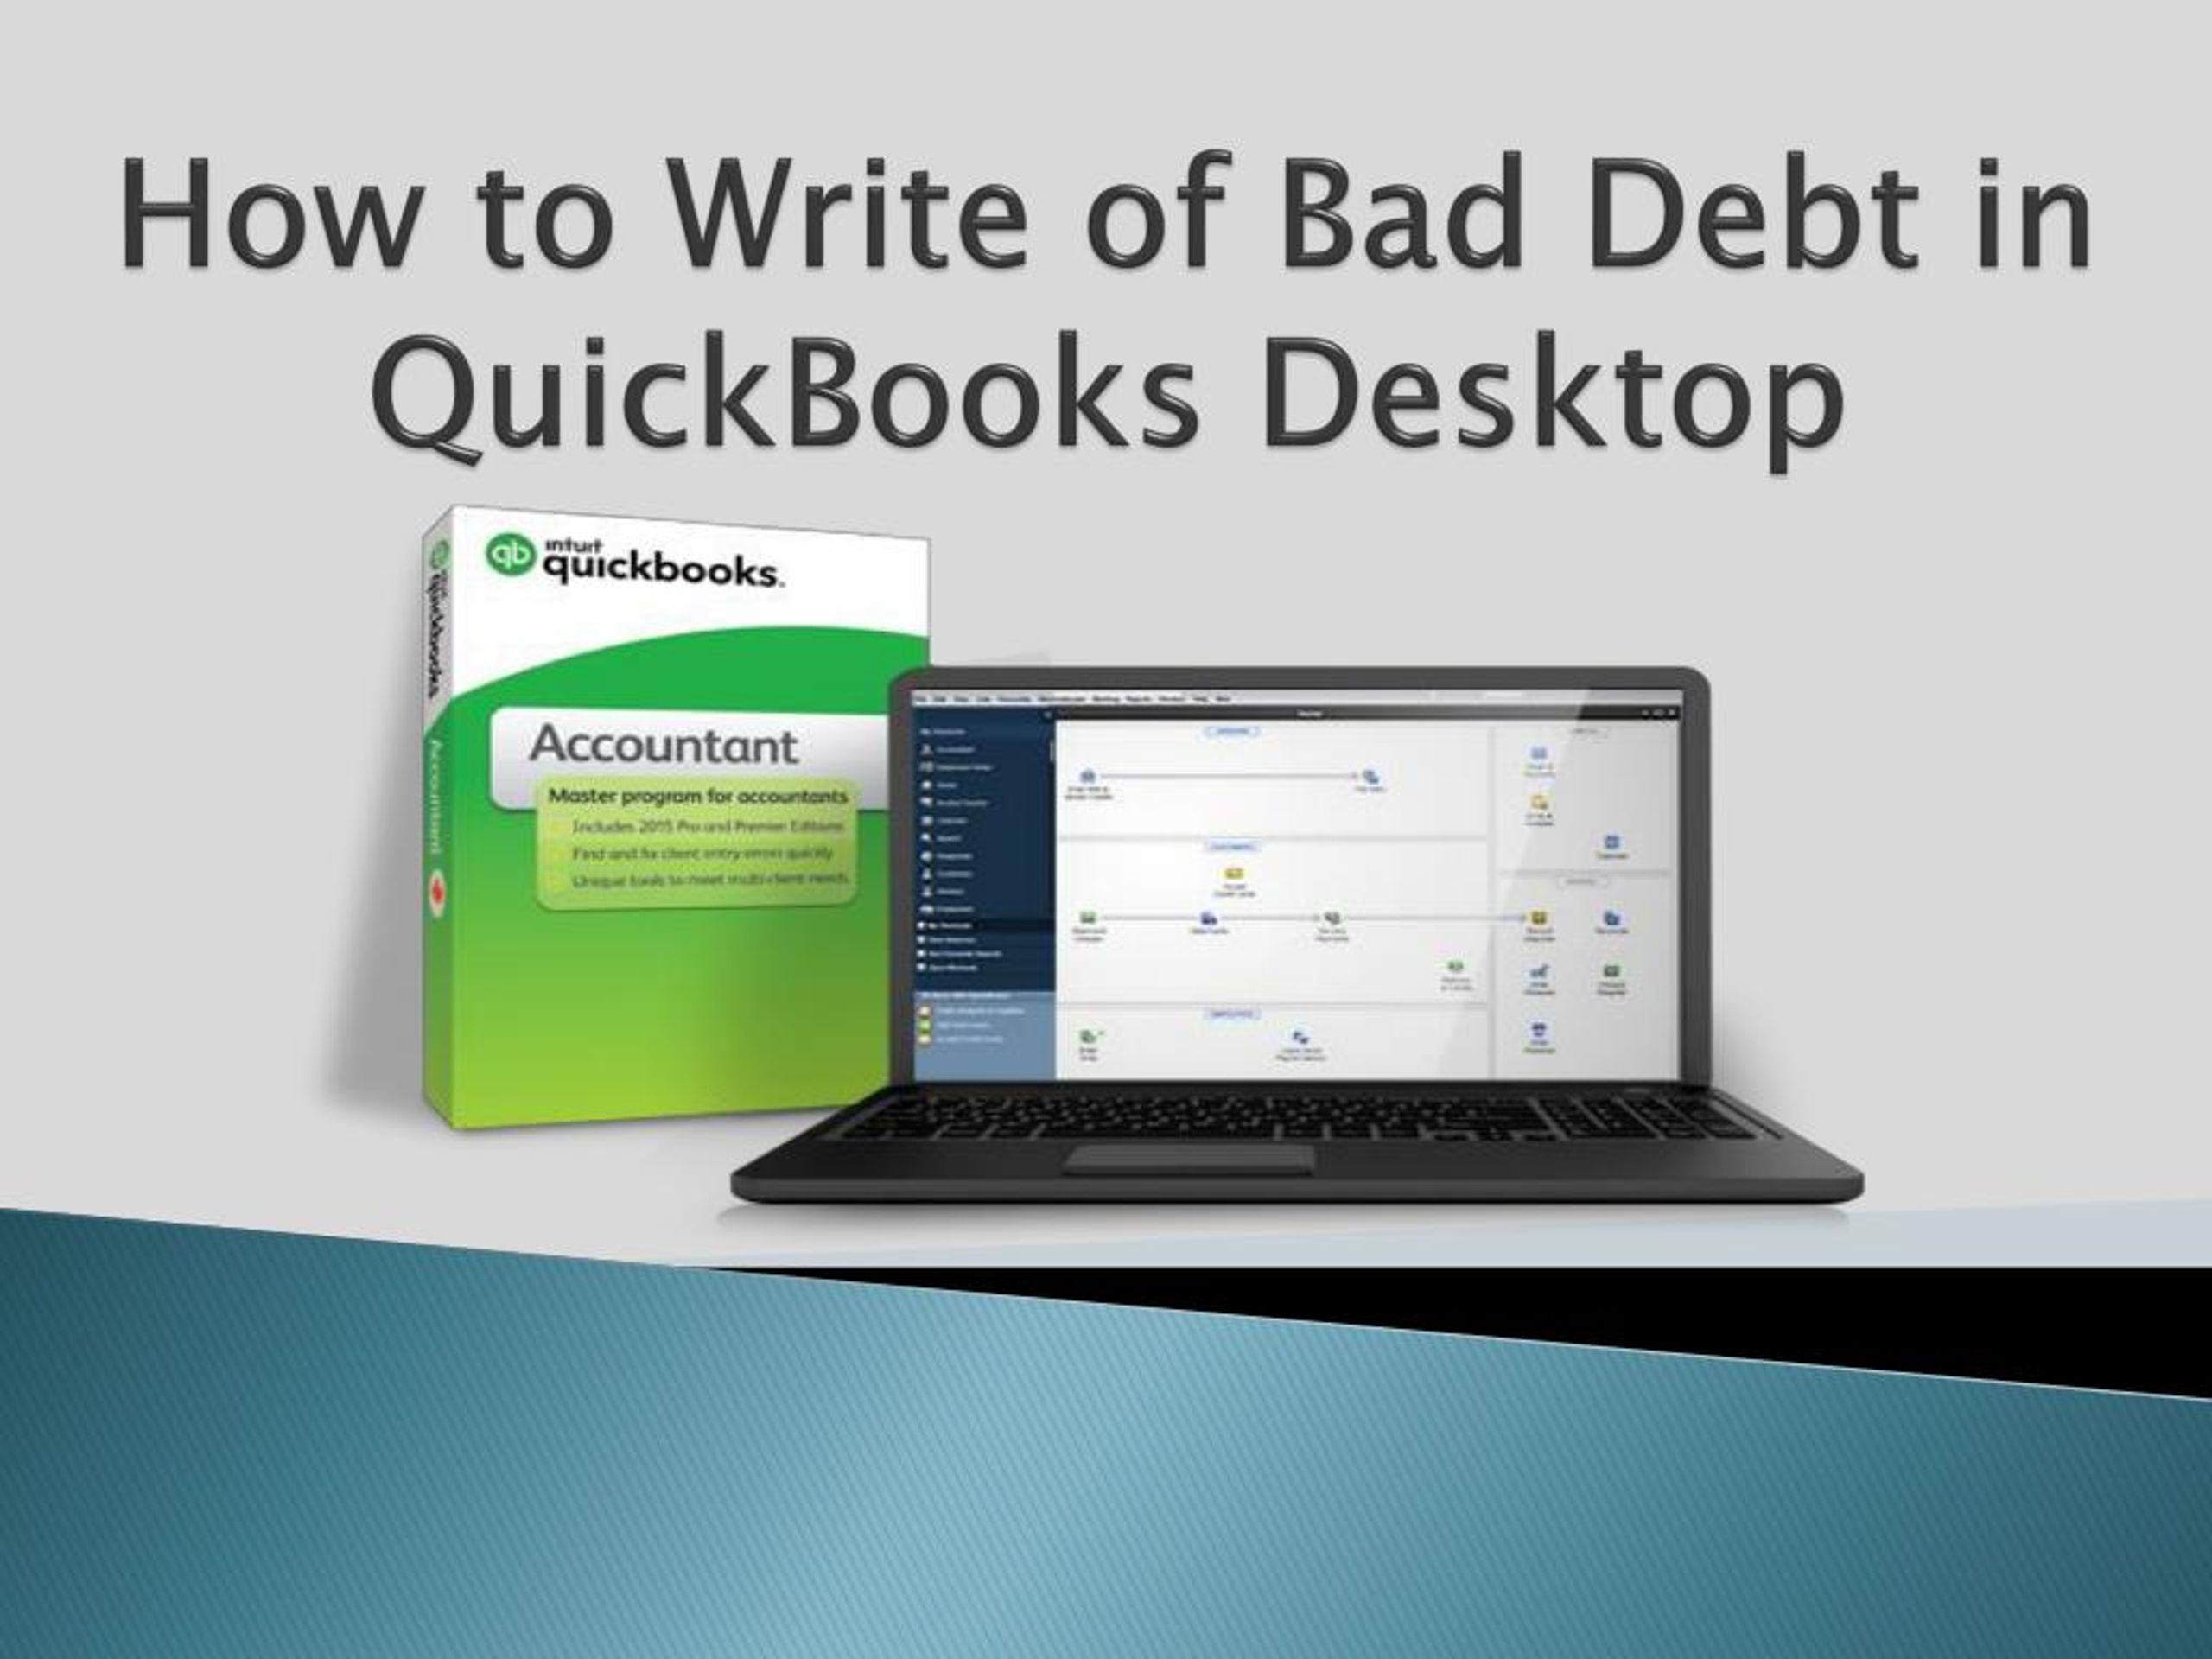 PPT - How to Write of Bad Debt in QuickBooks Desktop PowerPoint